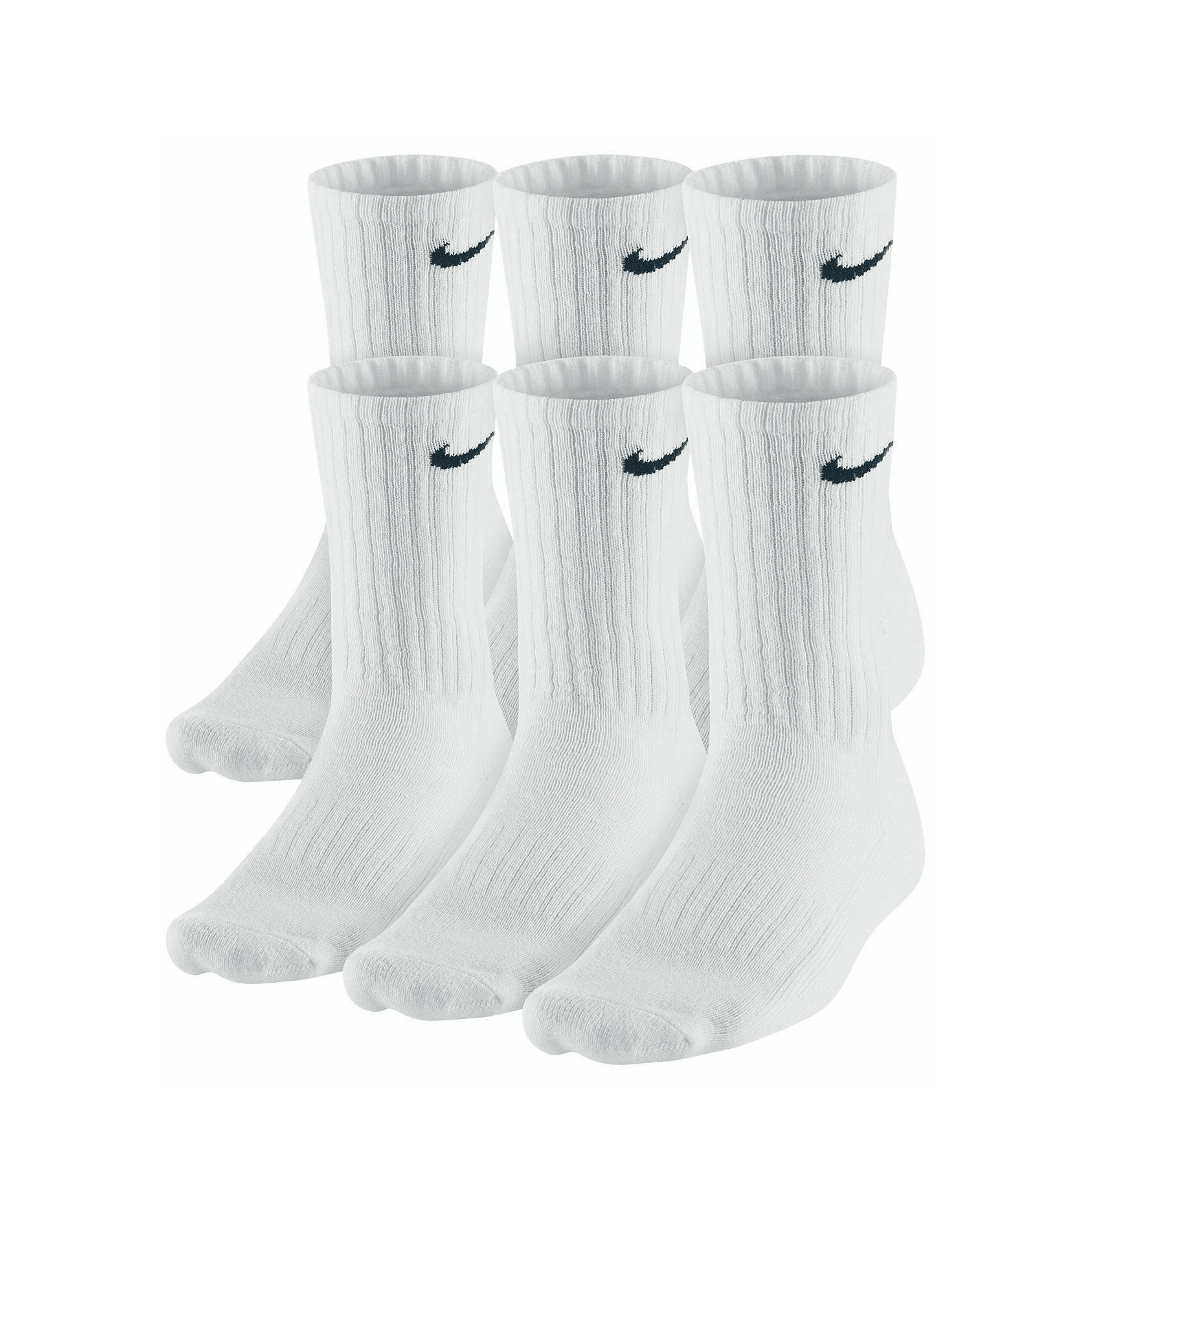 Nike Men's Cotton Cushion Crew Socks 6-Pack - White